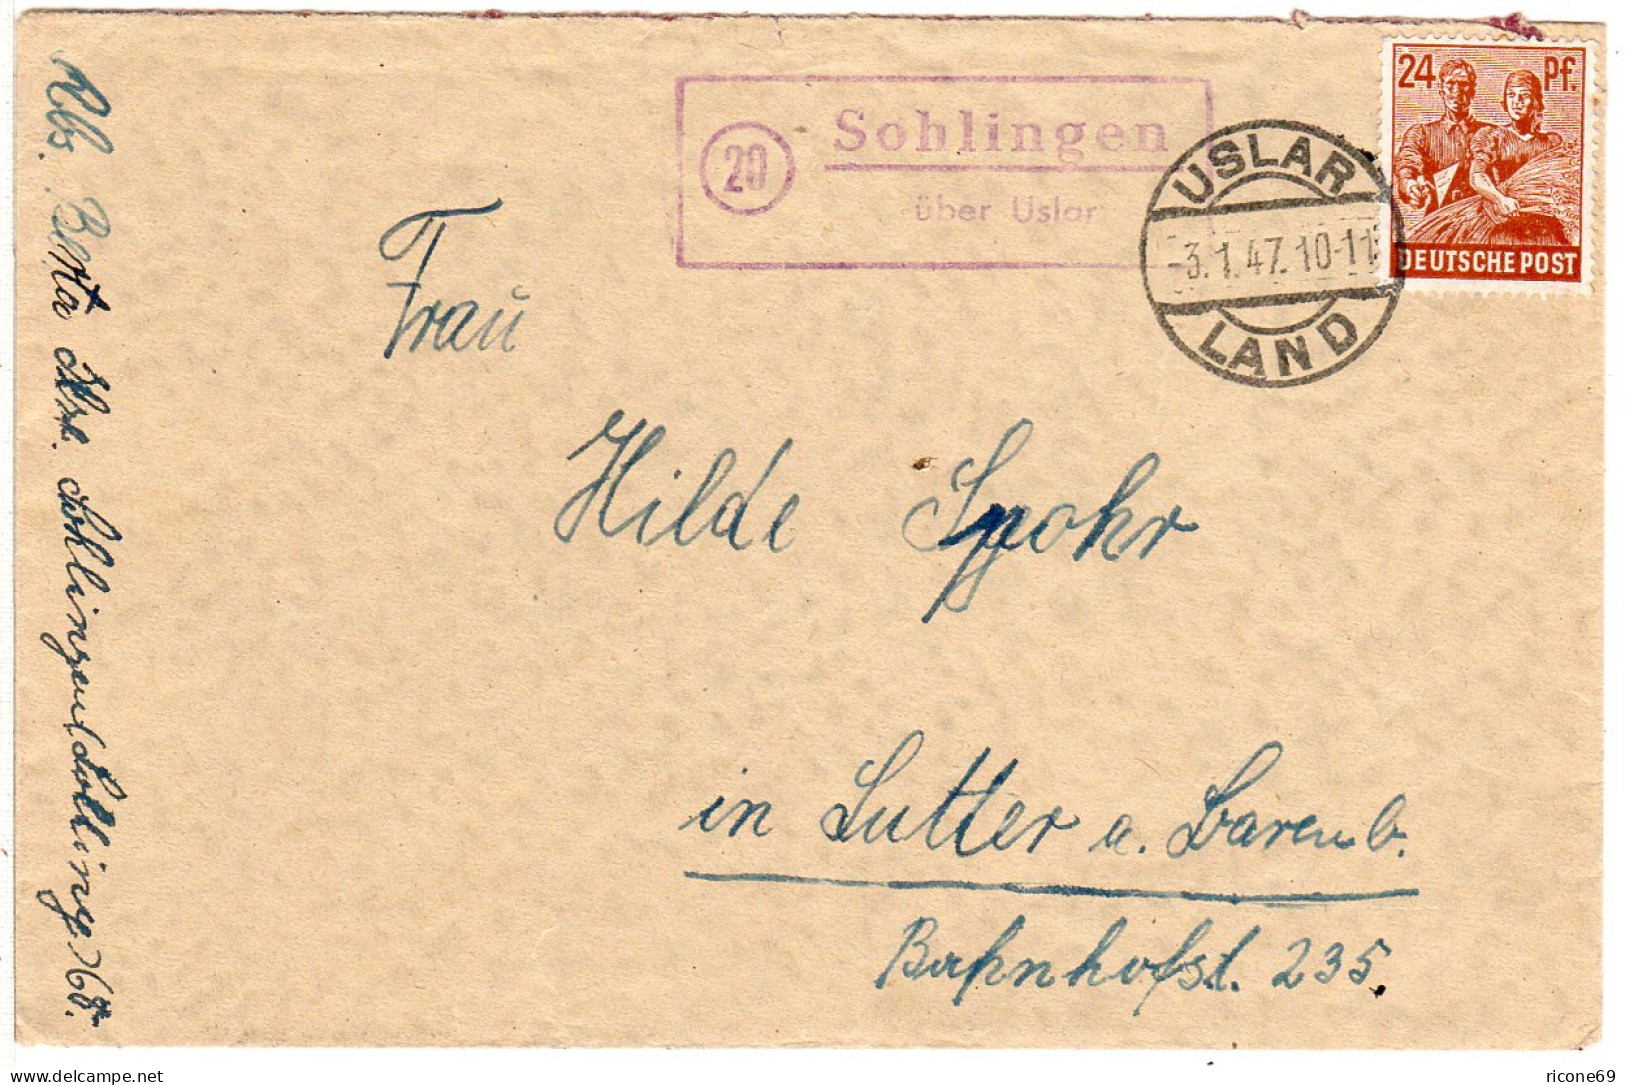 1947, Landpost Stpl. 20 SOHLINGEN über Uslar Auf Brief M. 24 Pf.  - Briefe U. Dokumente